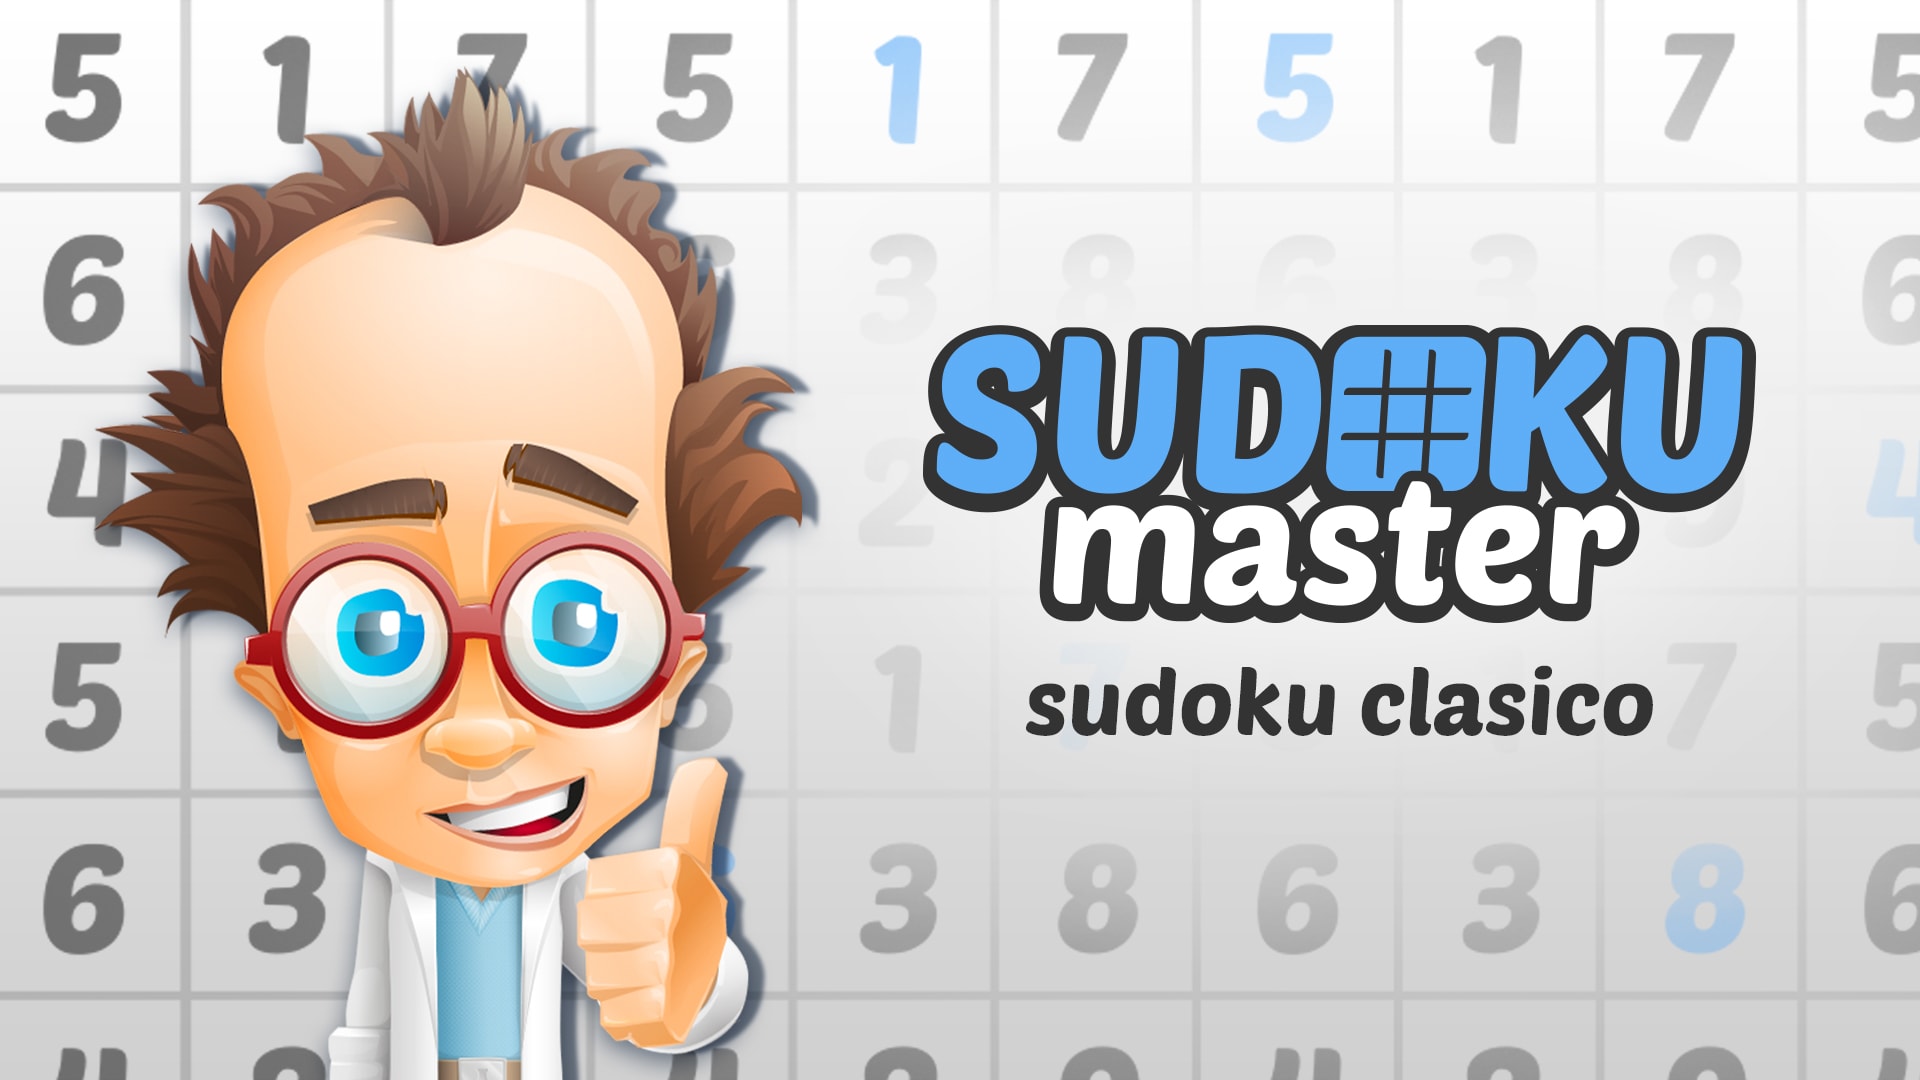 Sudoku Master - sudoku clasico